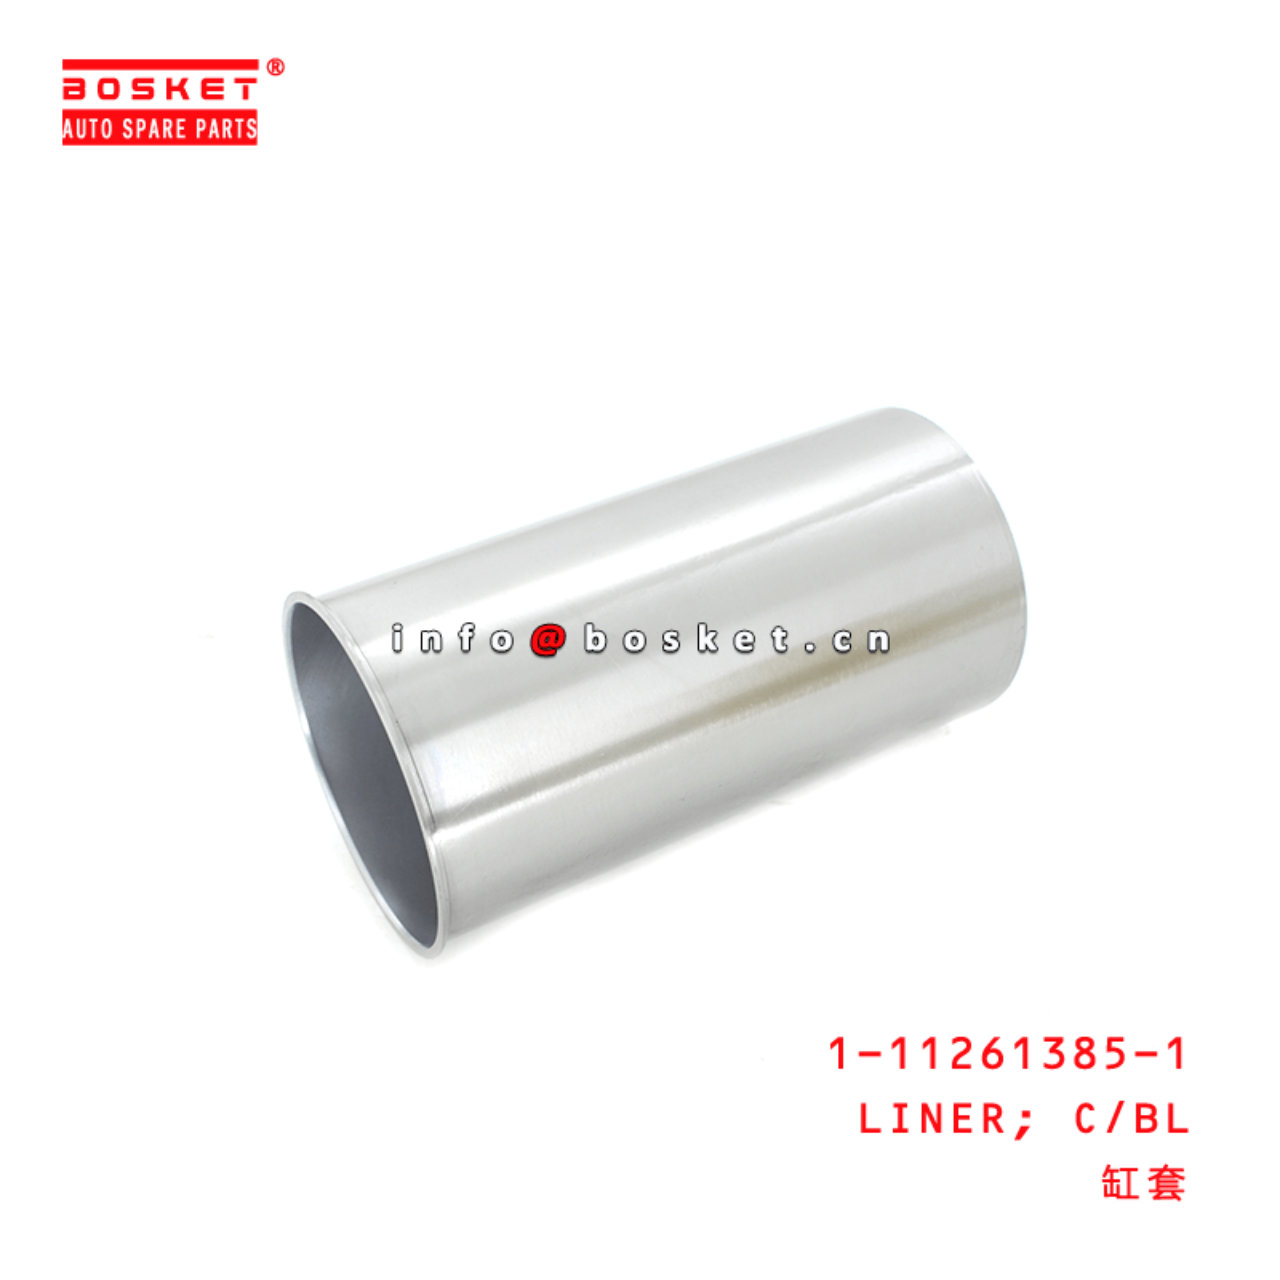 1-11261385-1 1112613851 Cylinder Block Liner Suitable for ISUZU FRR FSR 6BG1